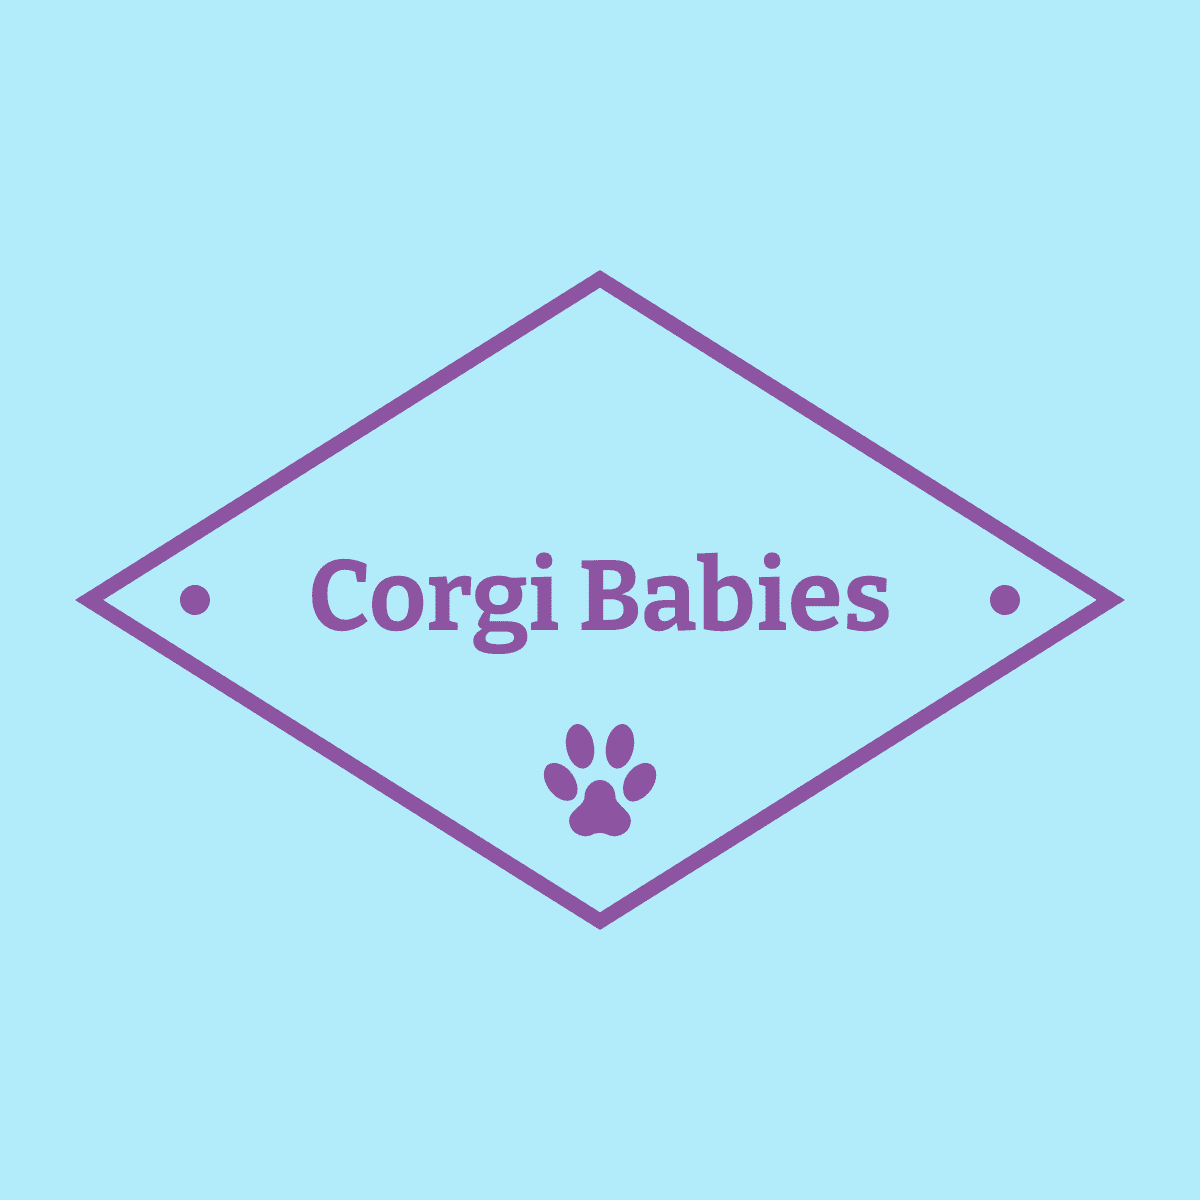 Corgi Babies